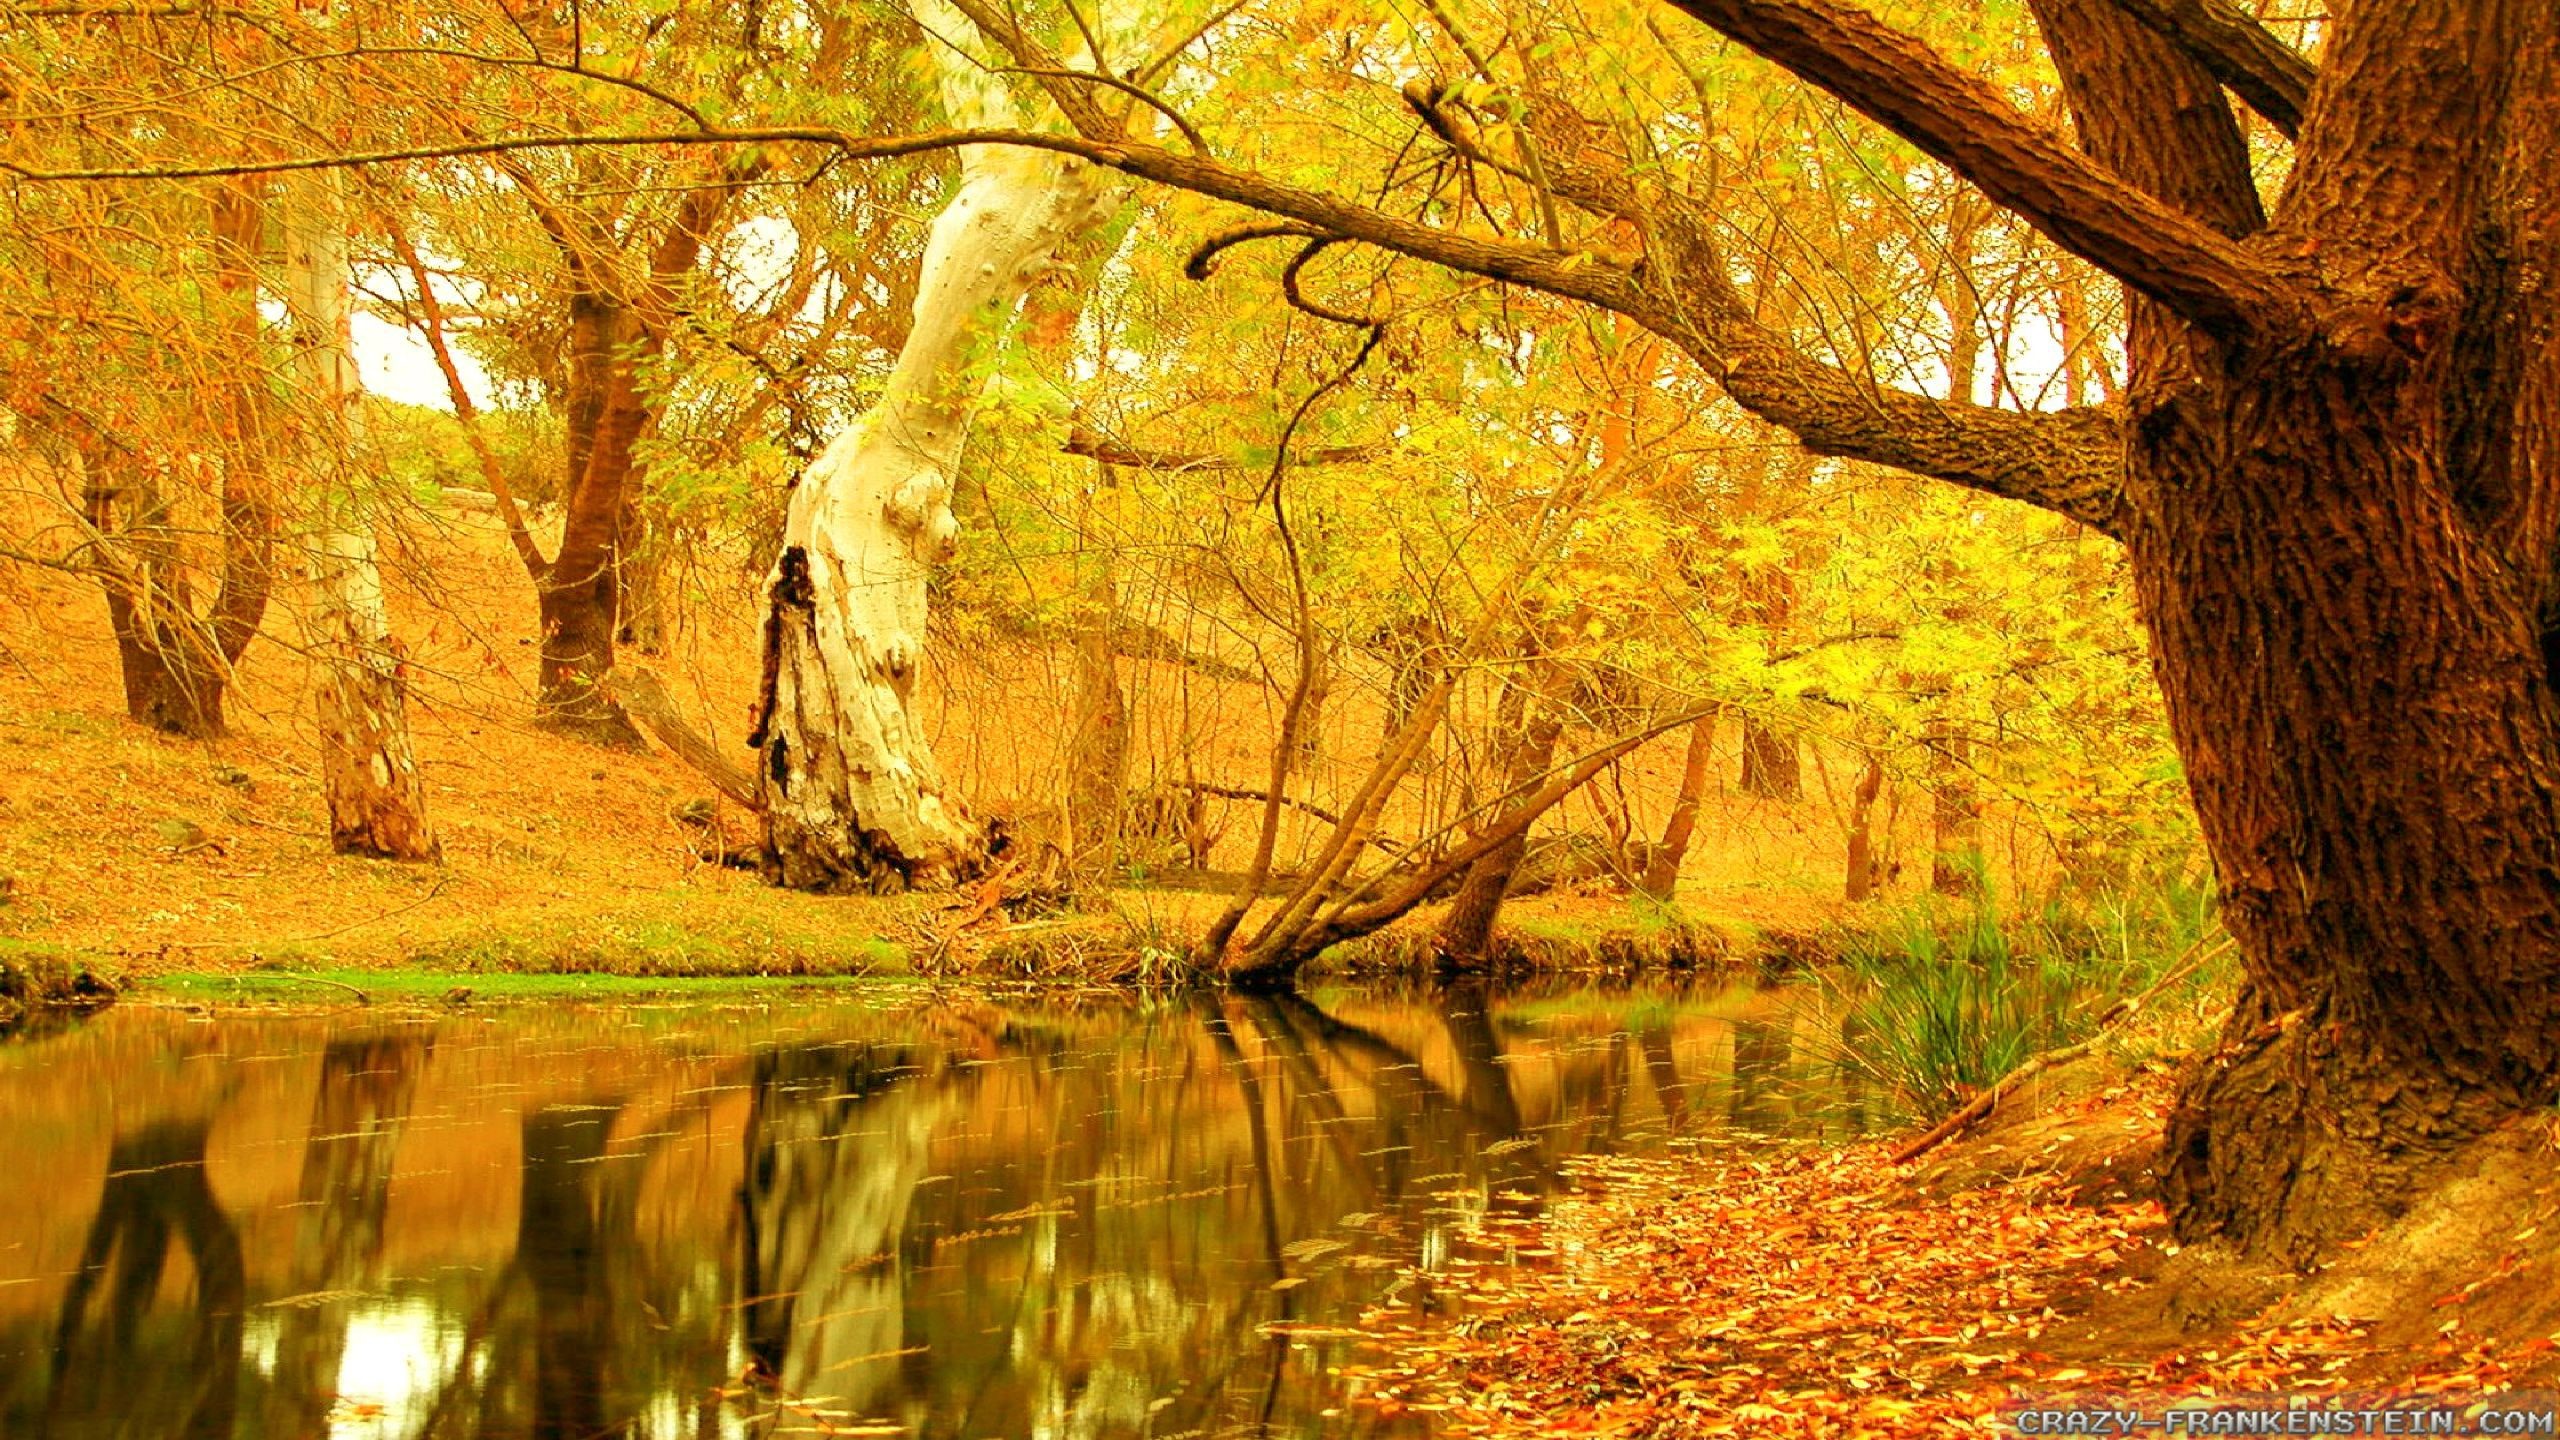 2560x1440 yellow-autumn-tree-1.jpg (2560Ã1440) | North American Forests | Pinterest |  Yellow tree, Wallpaper and Hd desktop